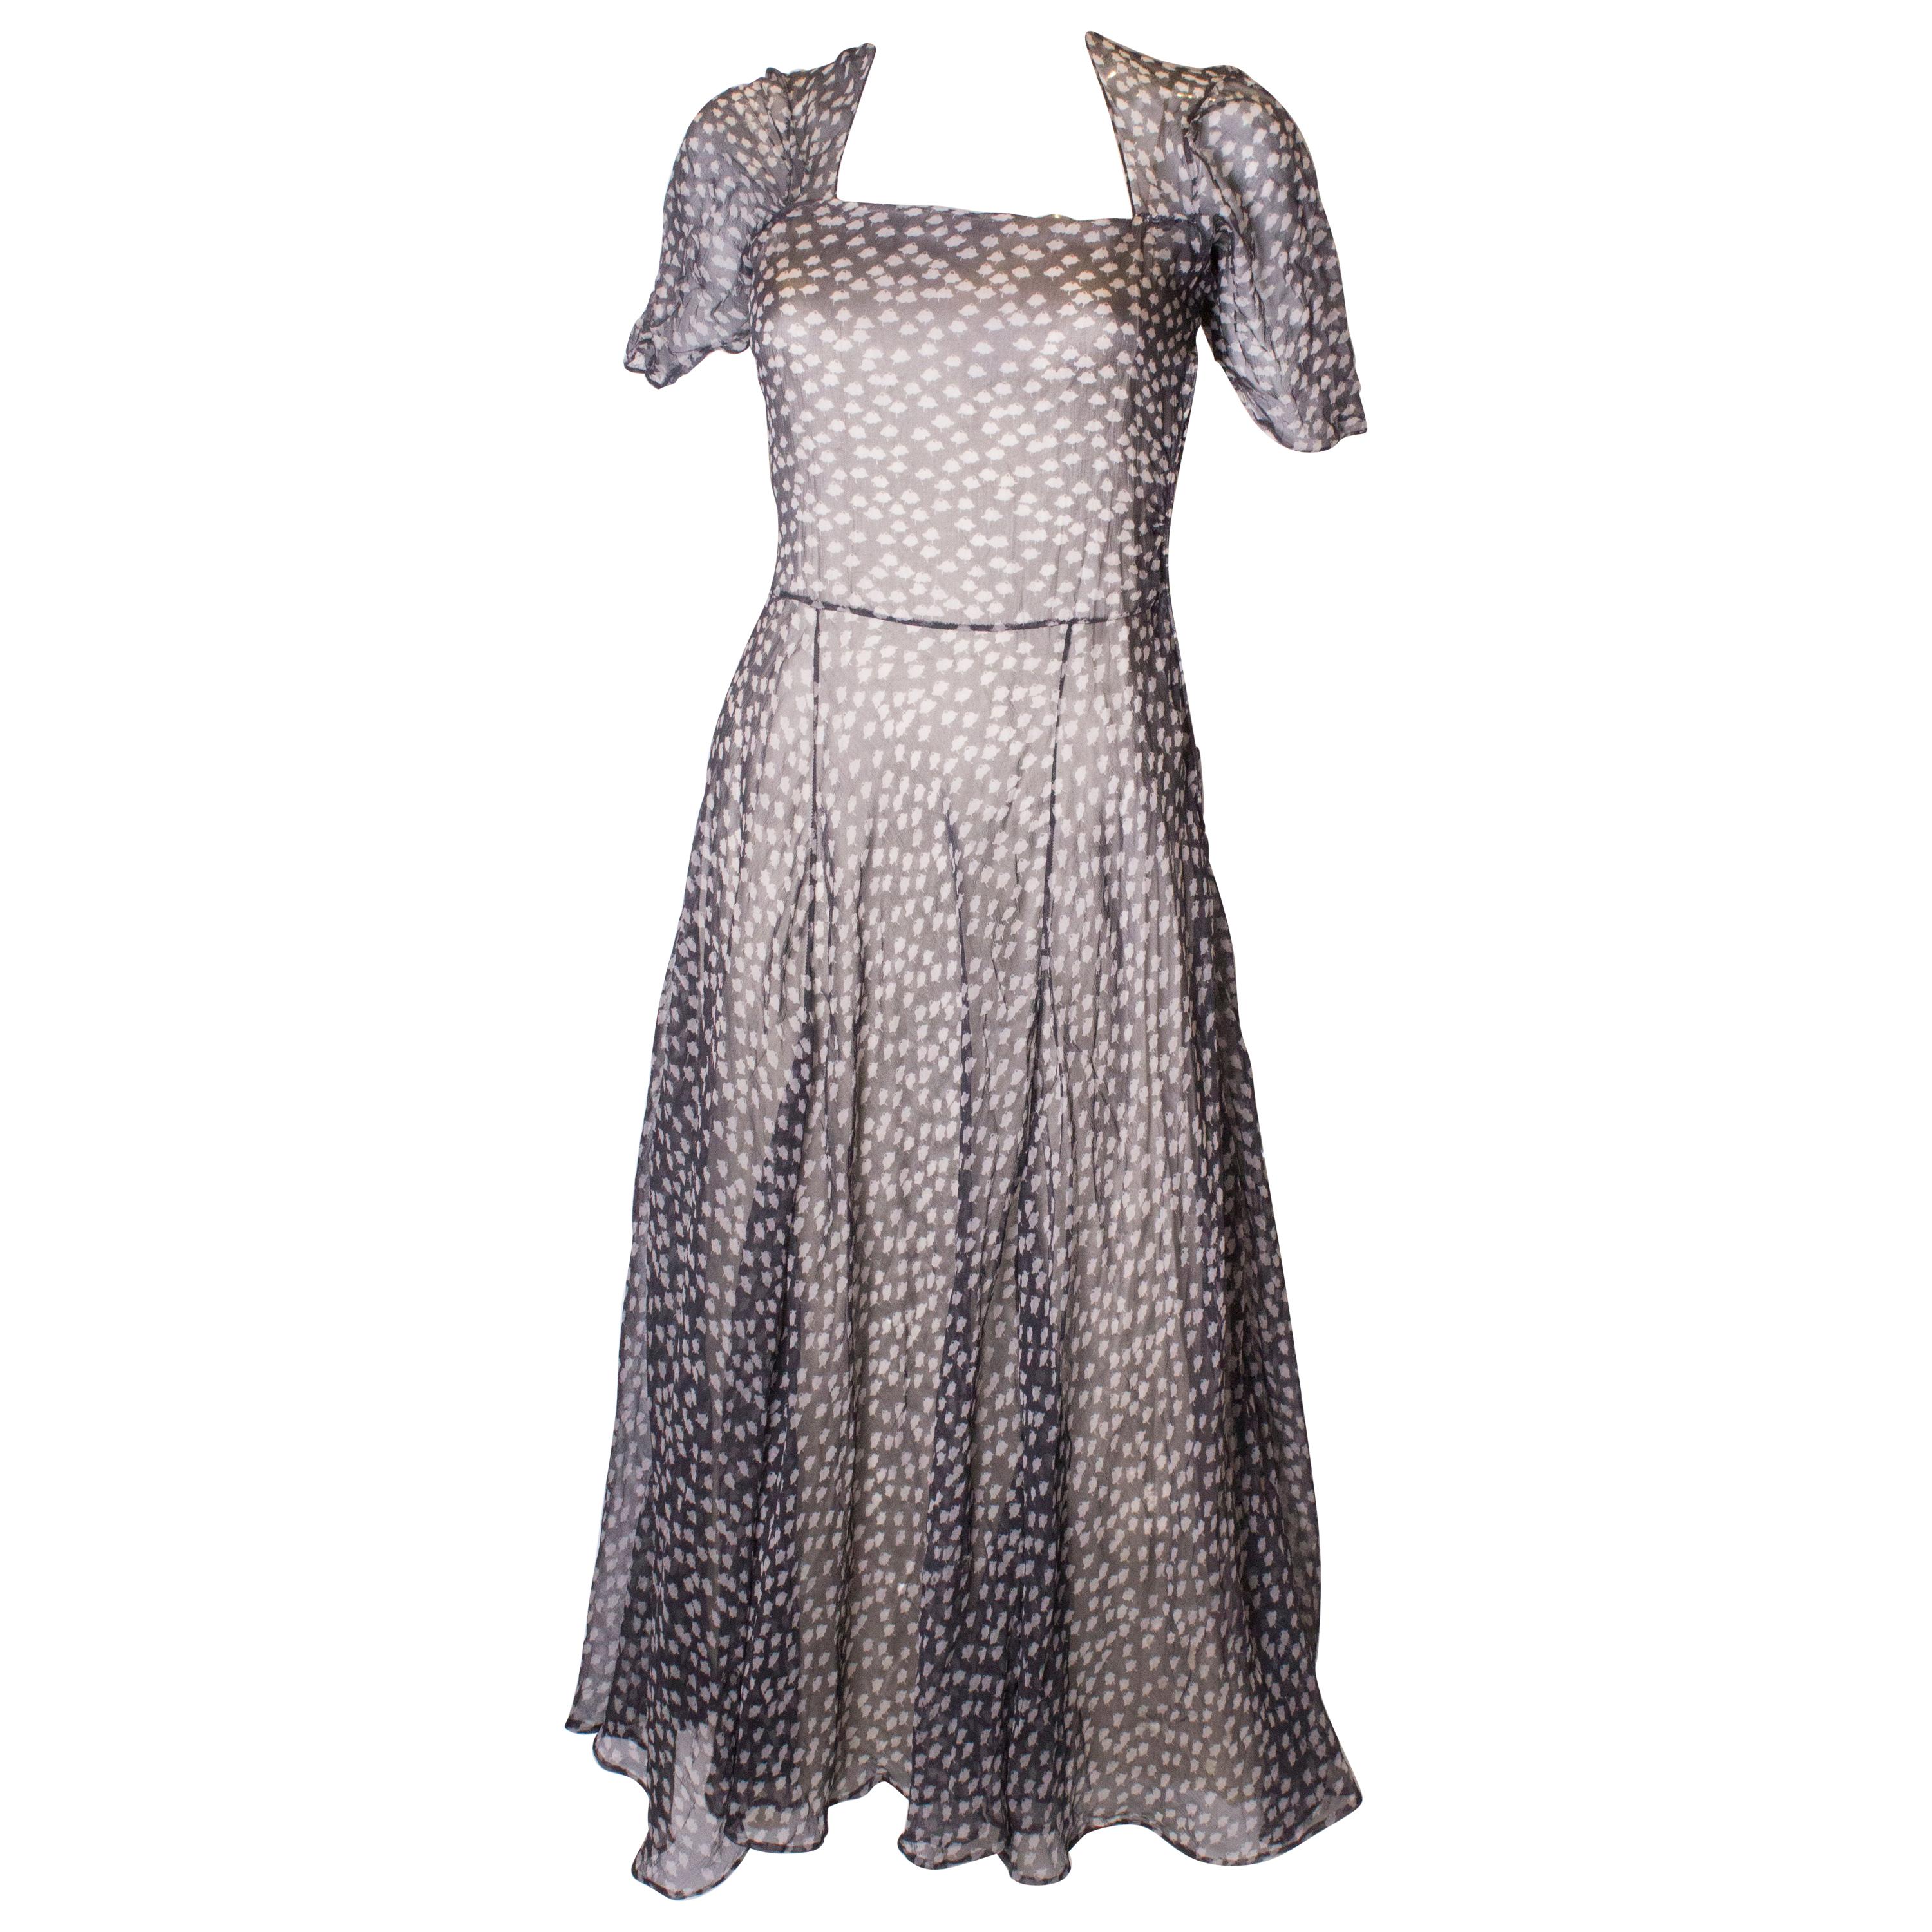 Vintage 1940s Silk Chiffon Dress